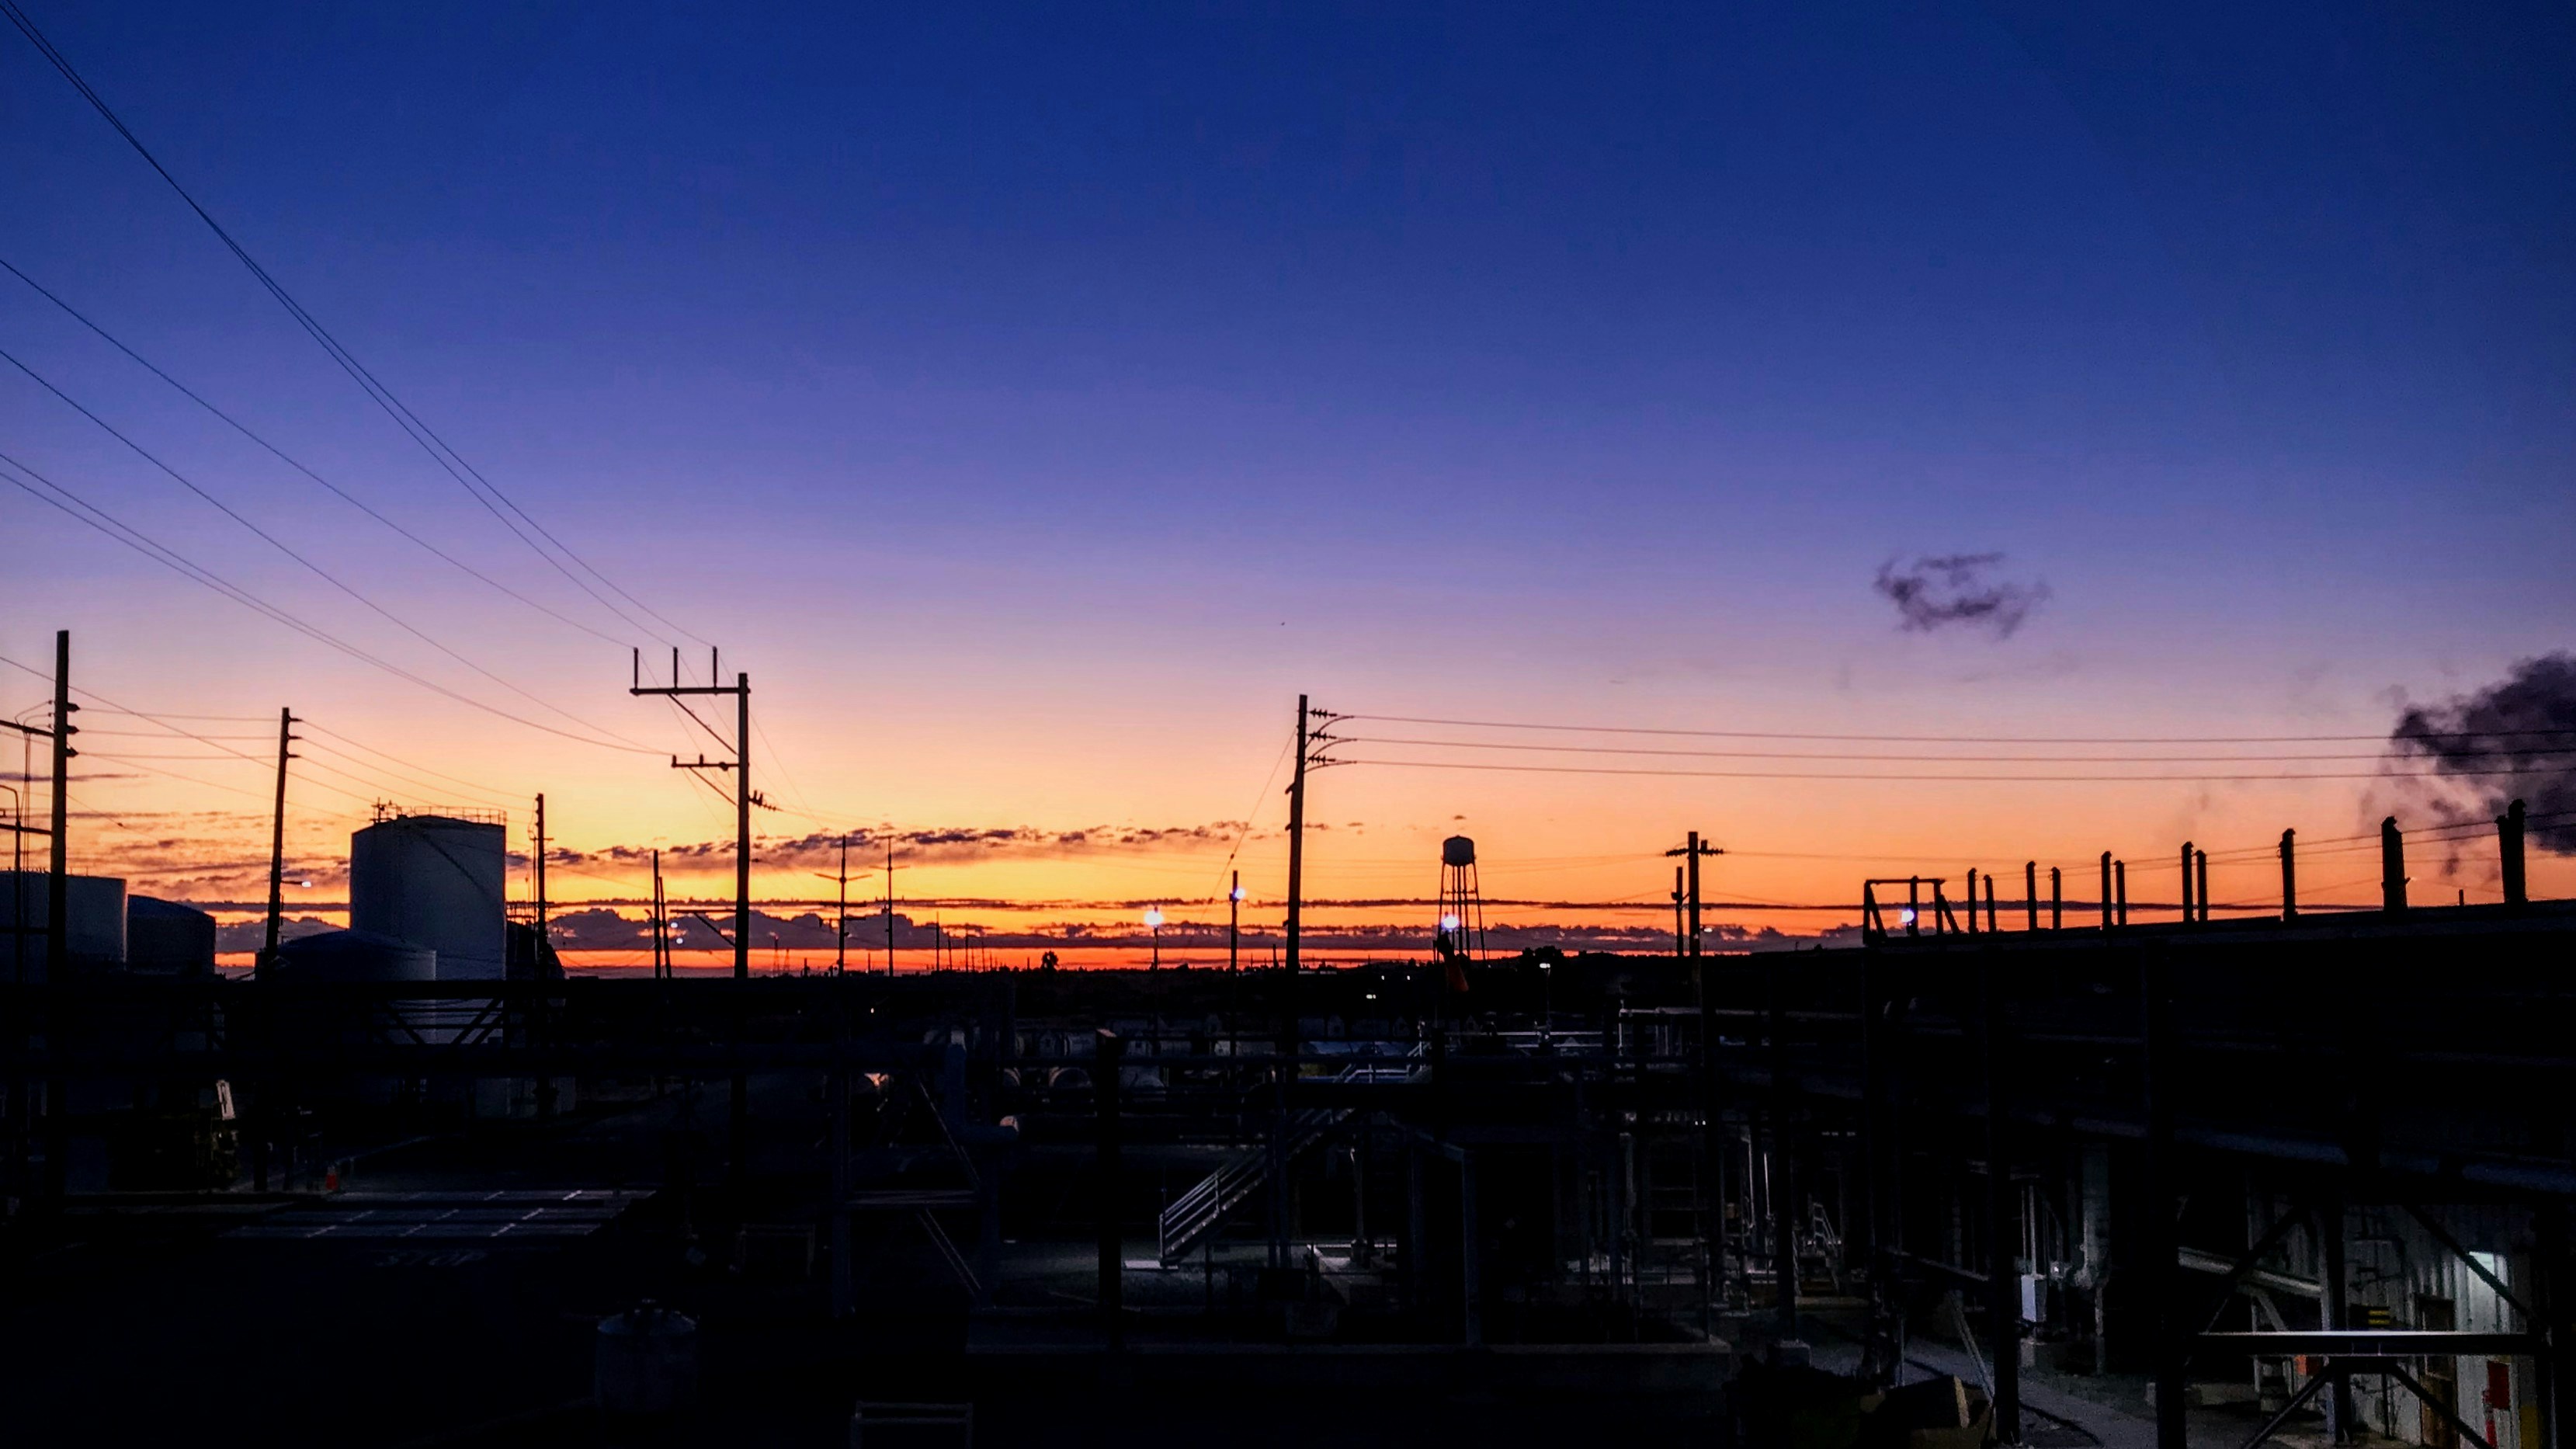 Sunrise at a chemical plant